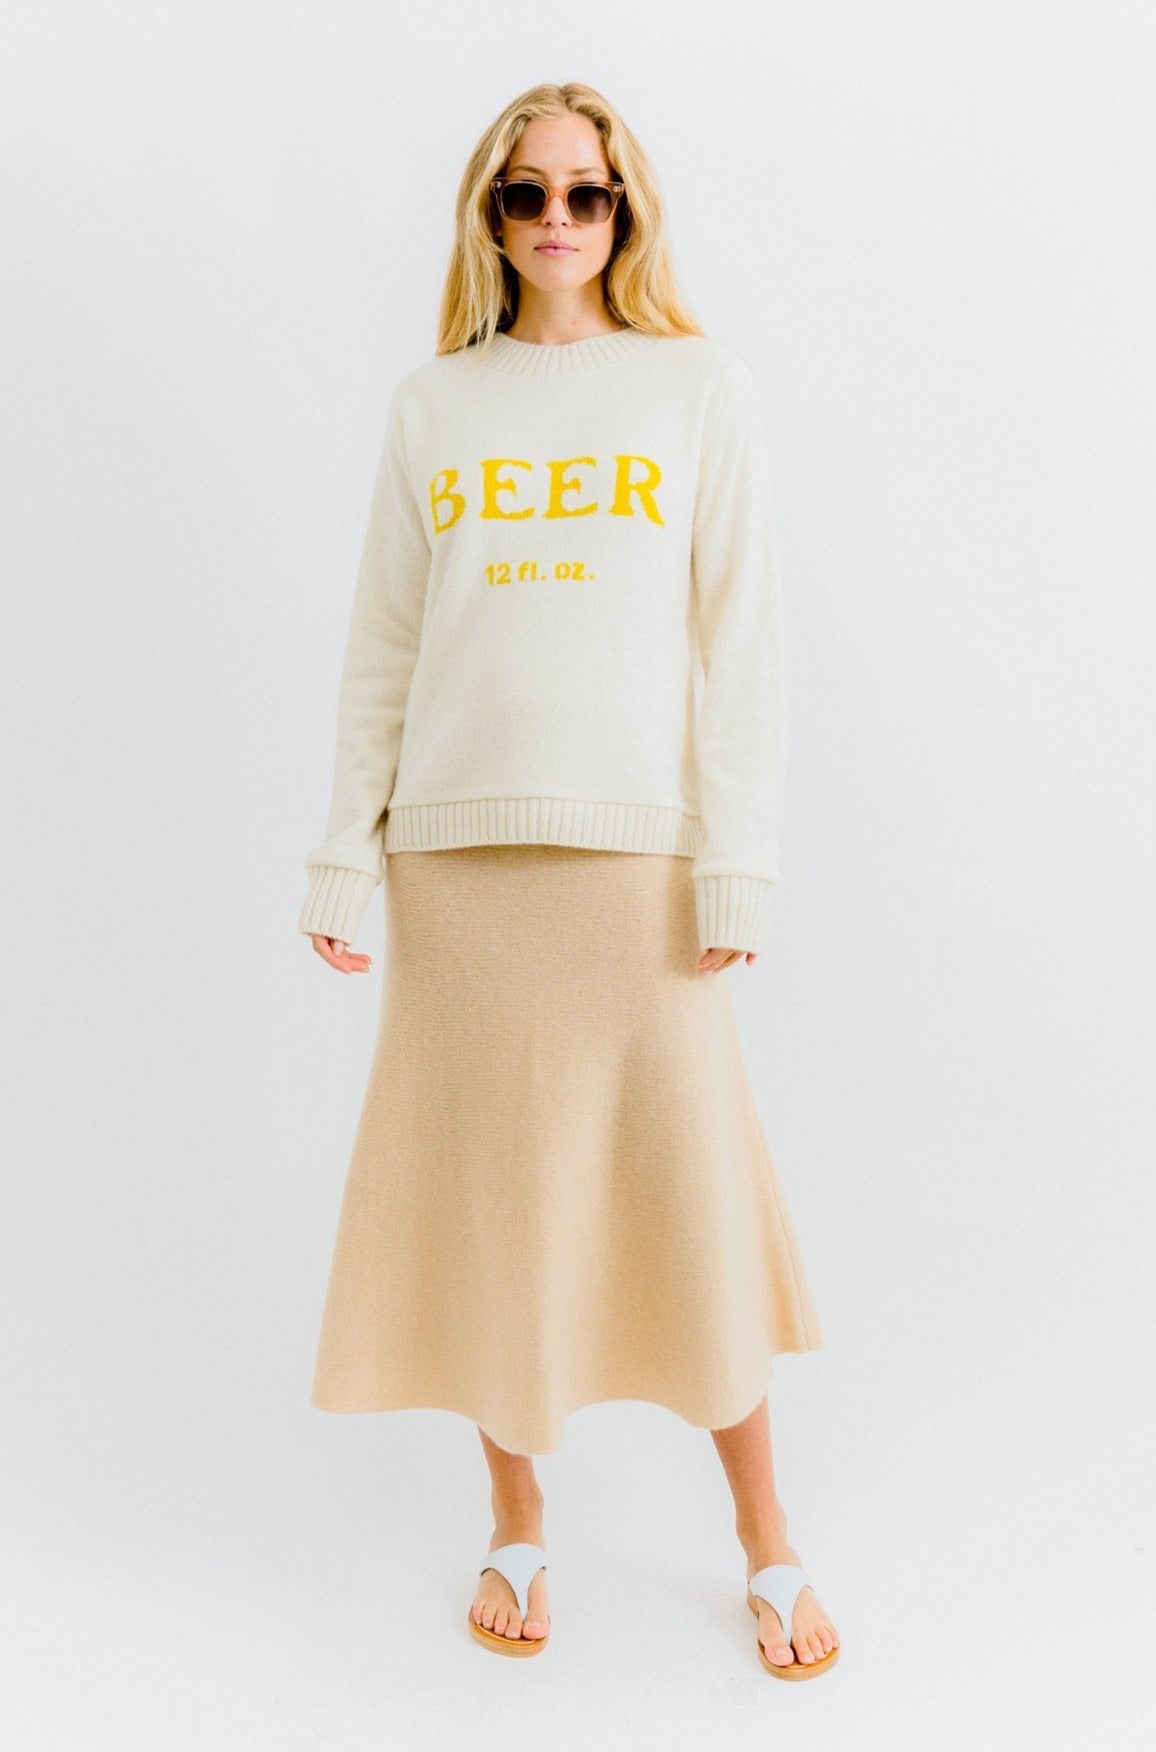 The-Elder-Statesman-beer-sweater-yellow-amarees